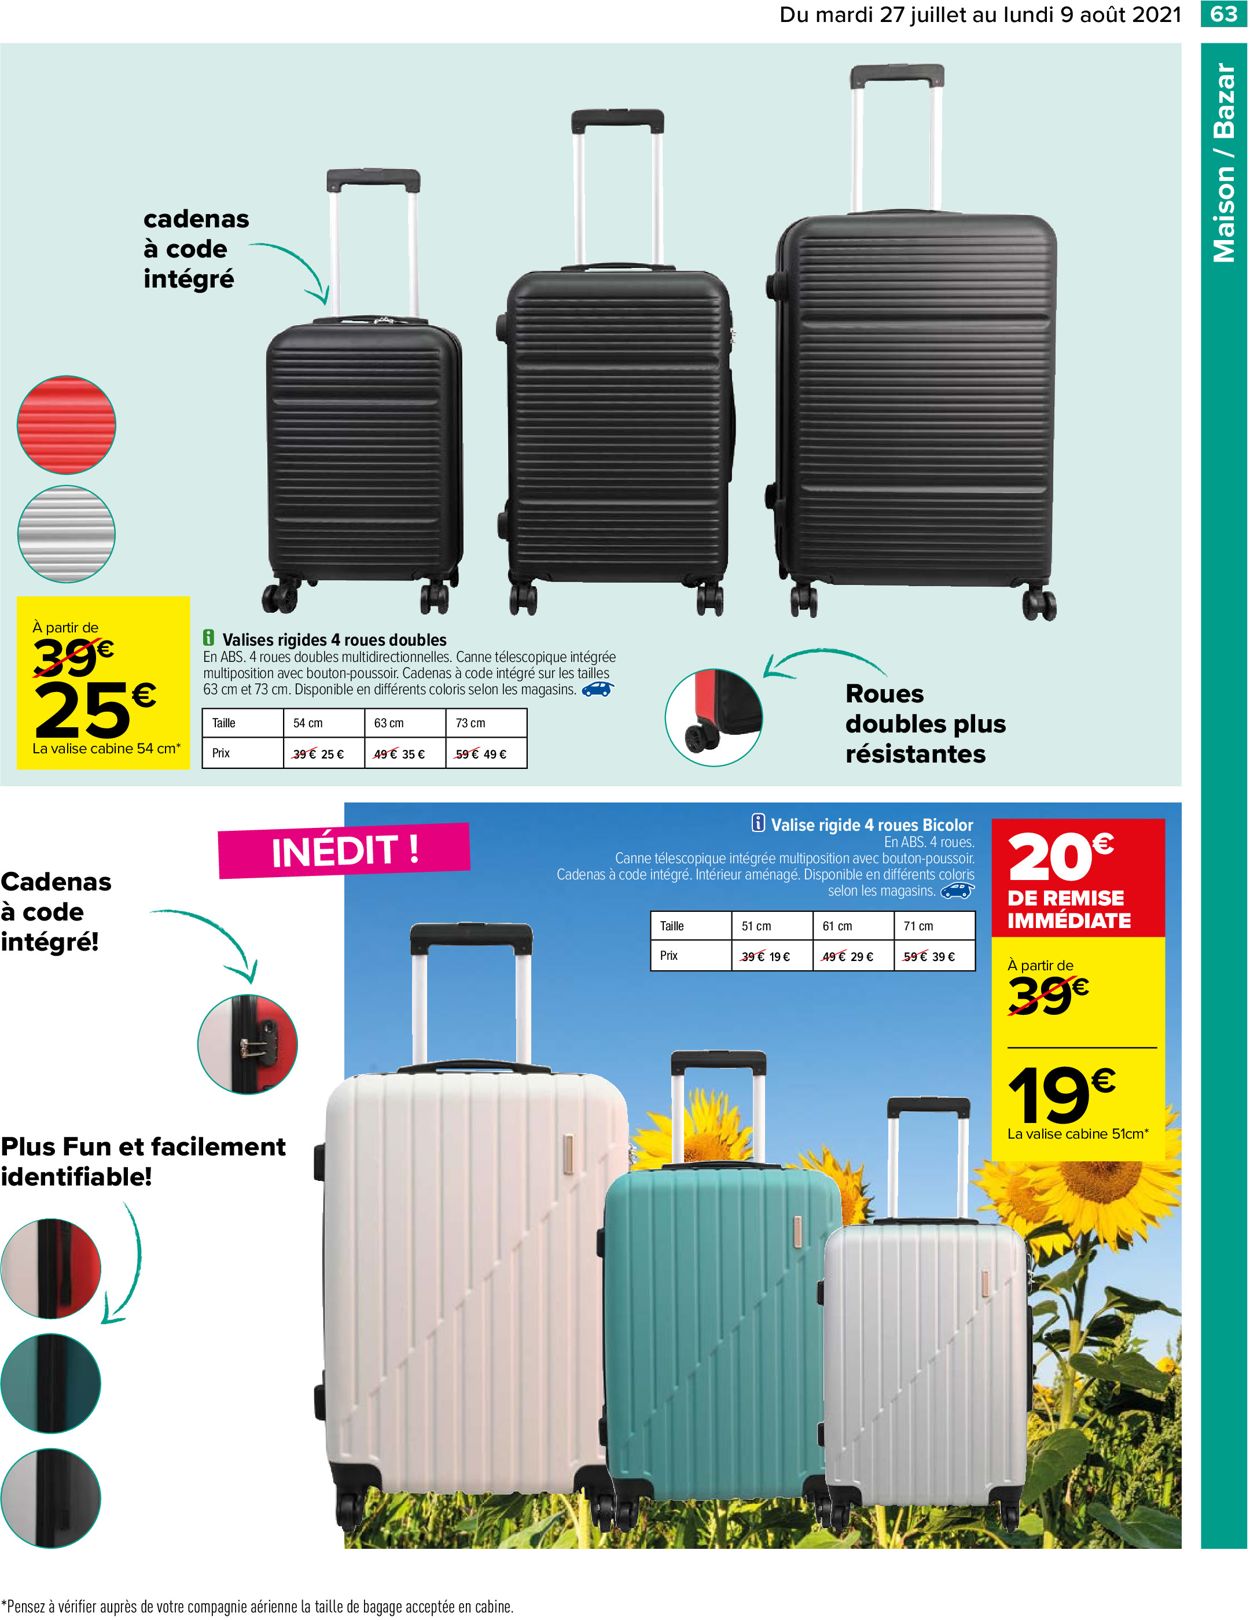 Carrefour Catalogue - 27.07-09.08.2021 (Page 63)